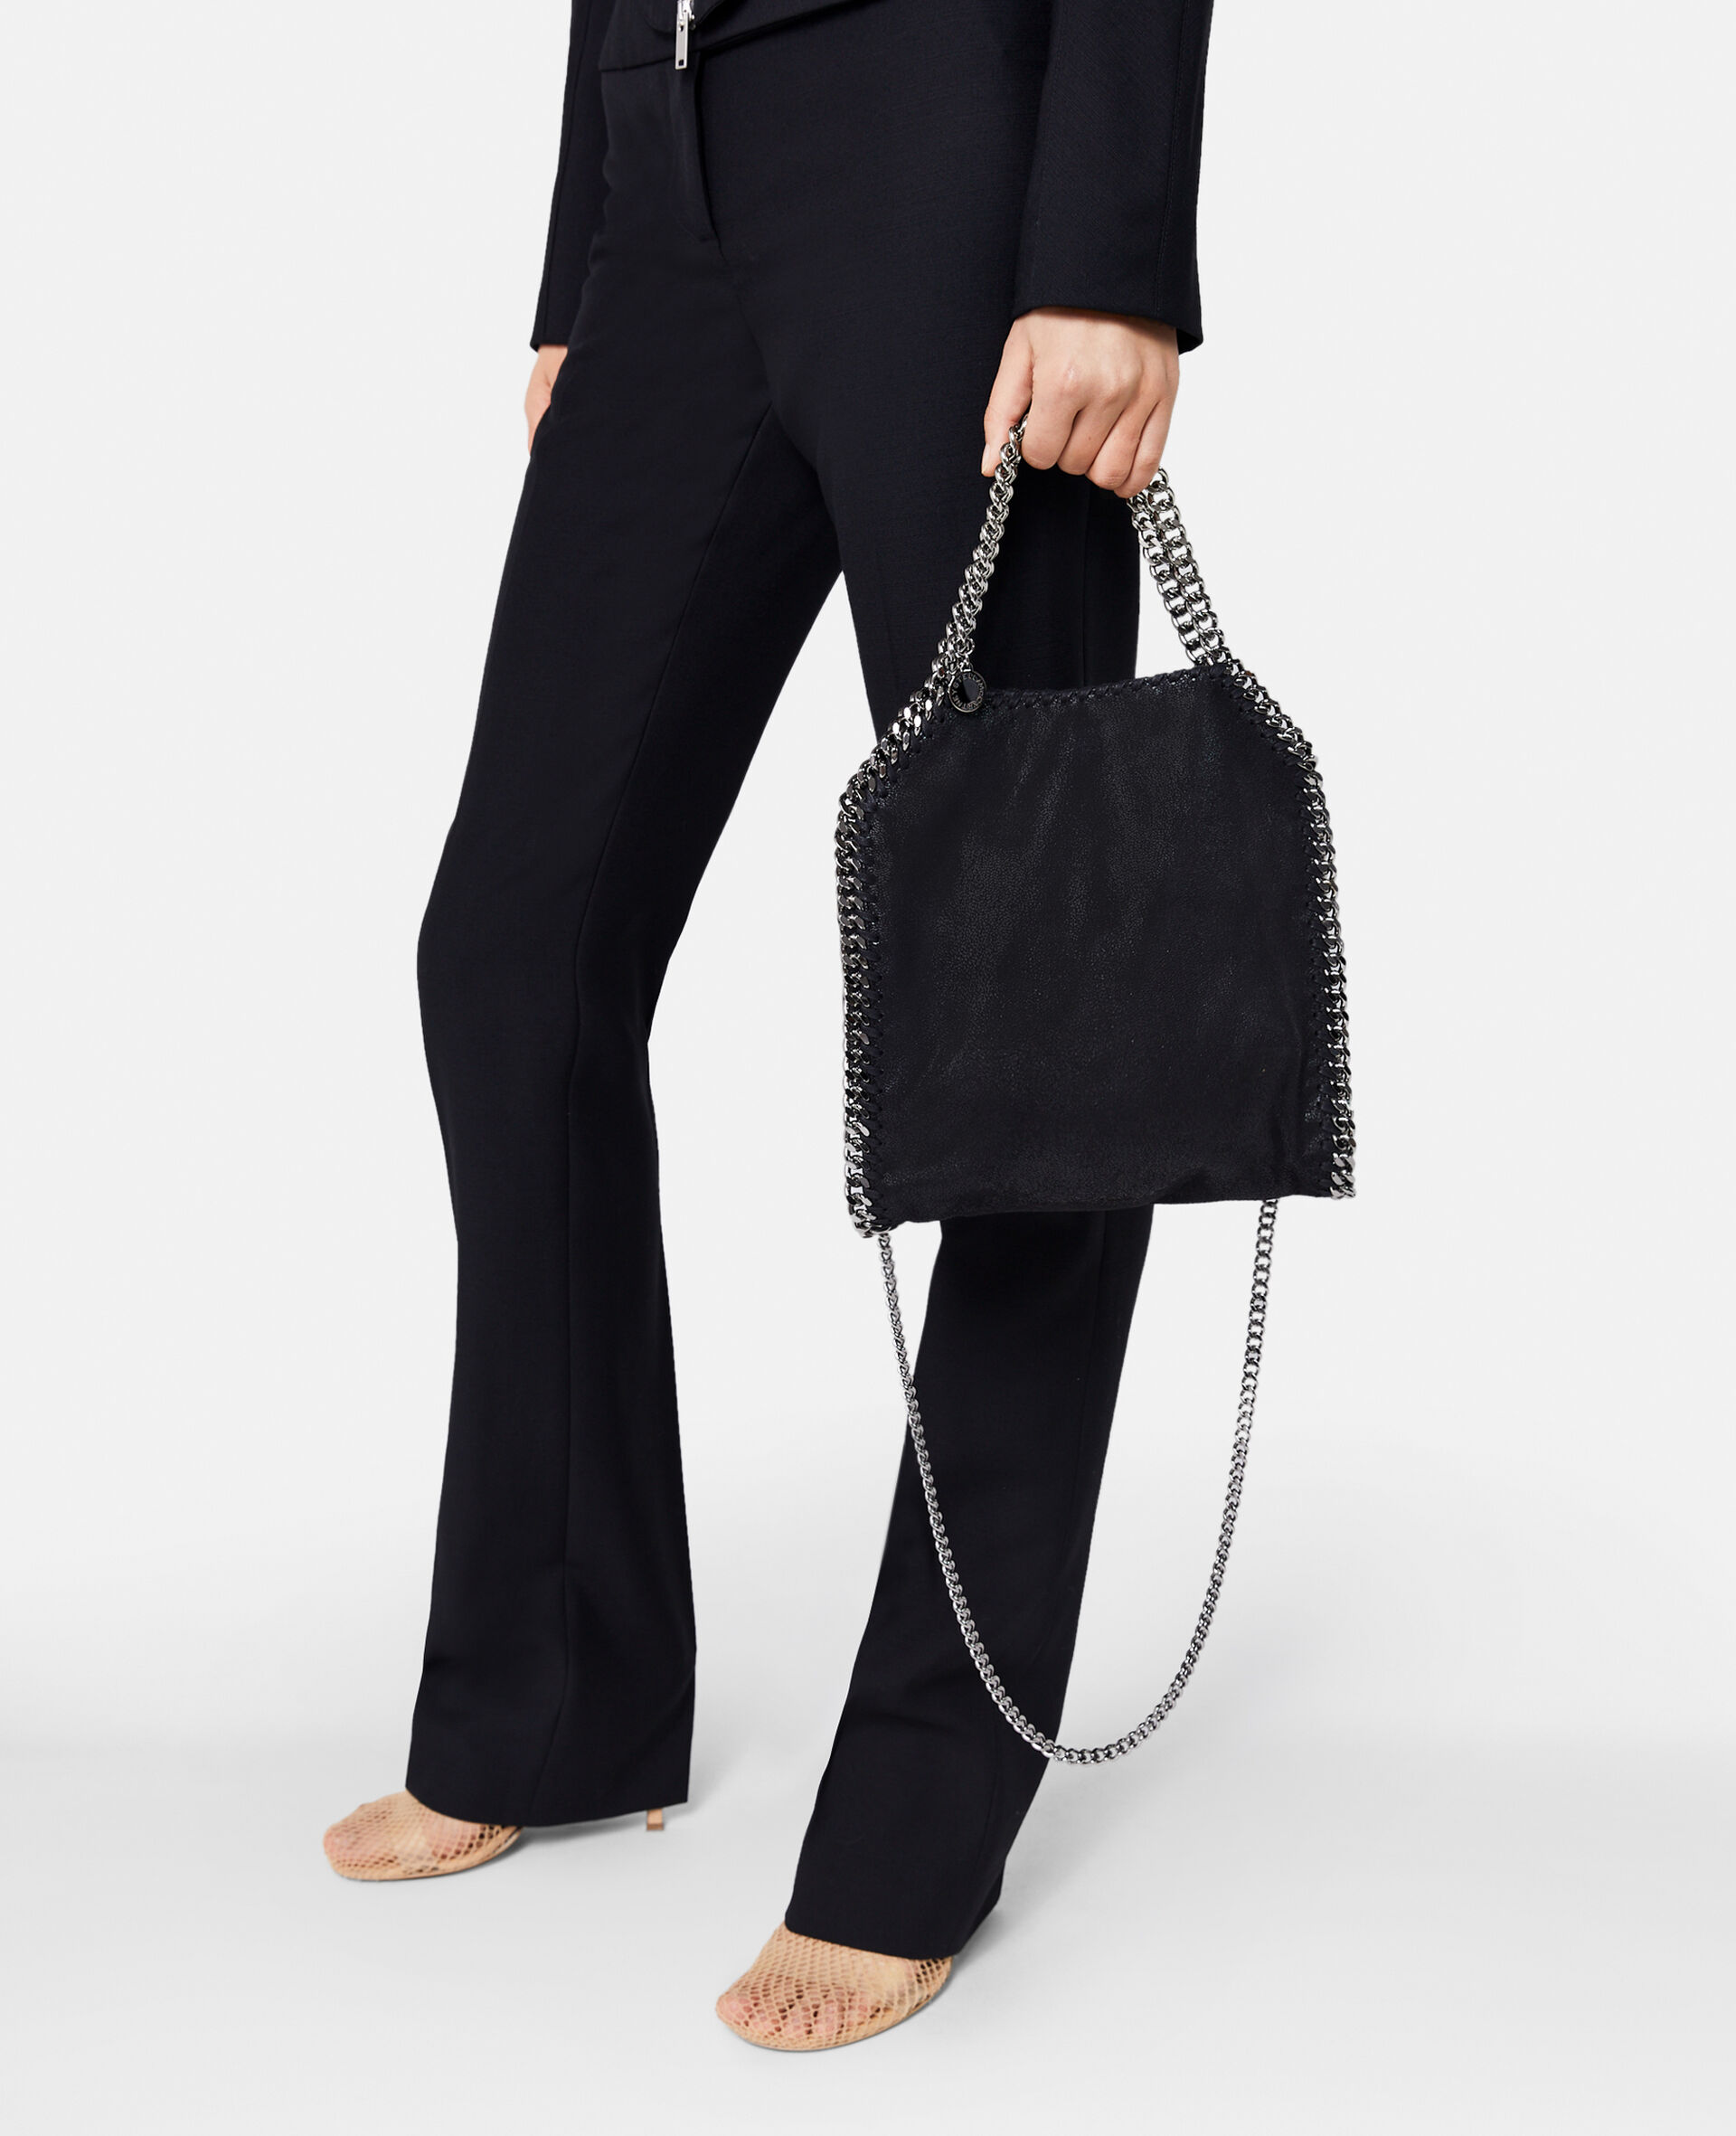 Stella McCartney Black Tiny Falabella Bag